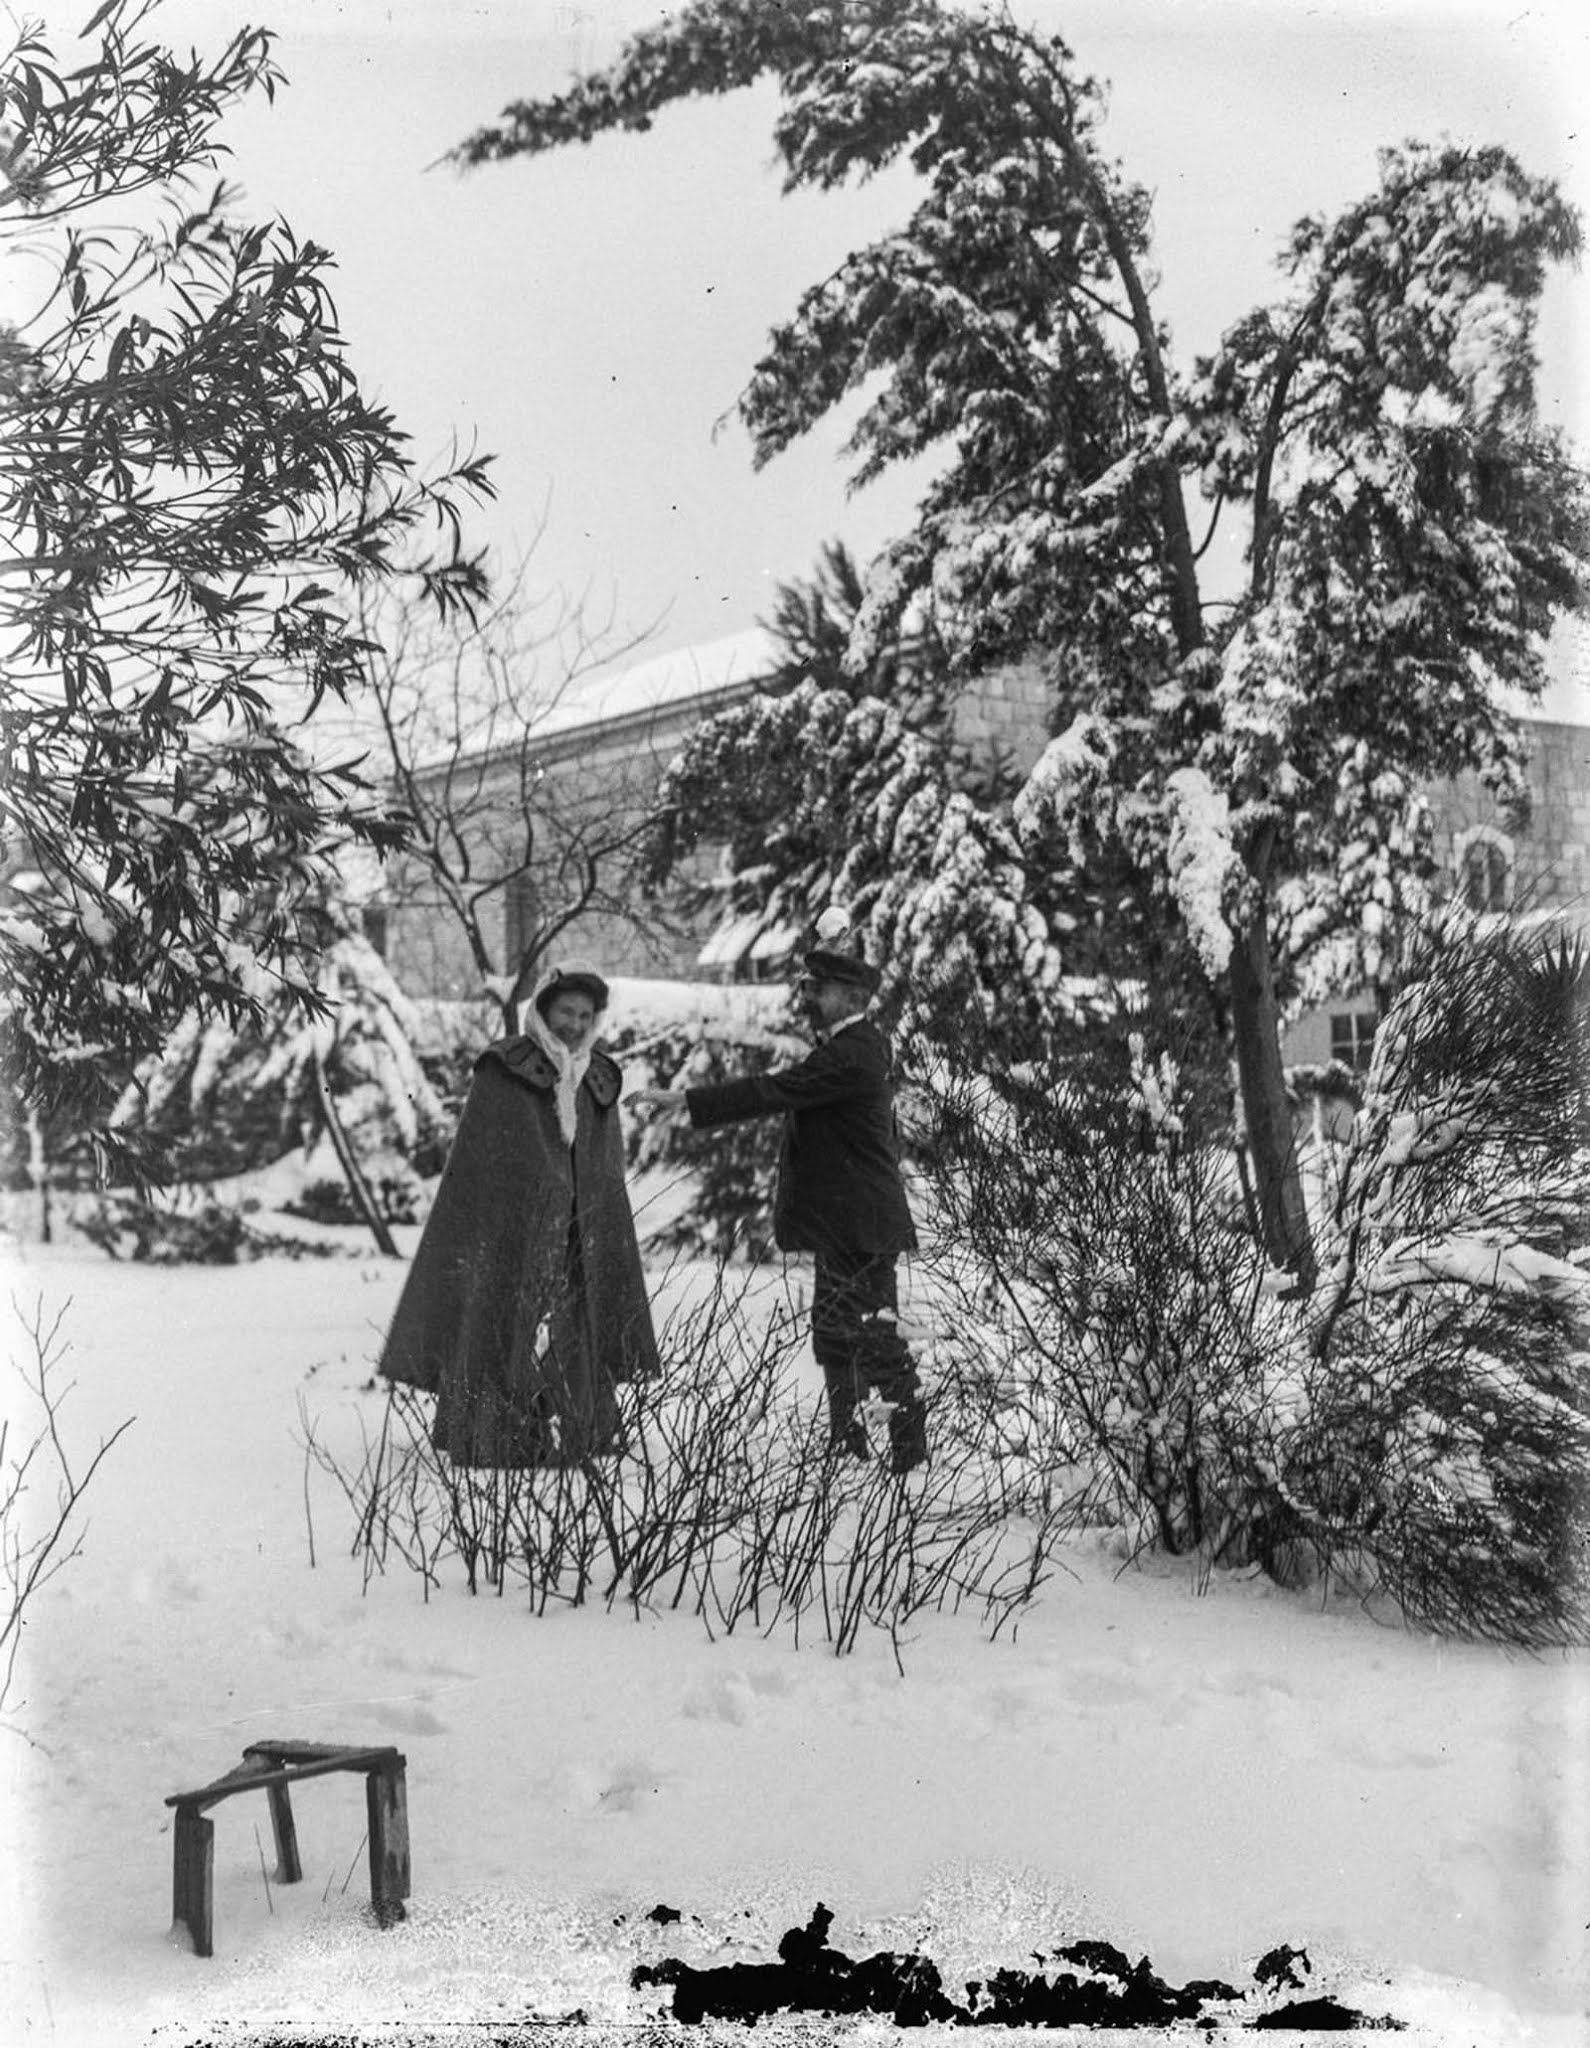 Jerusalem in snow, 1921